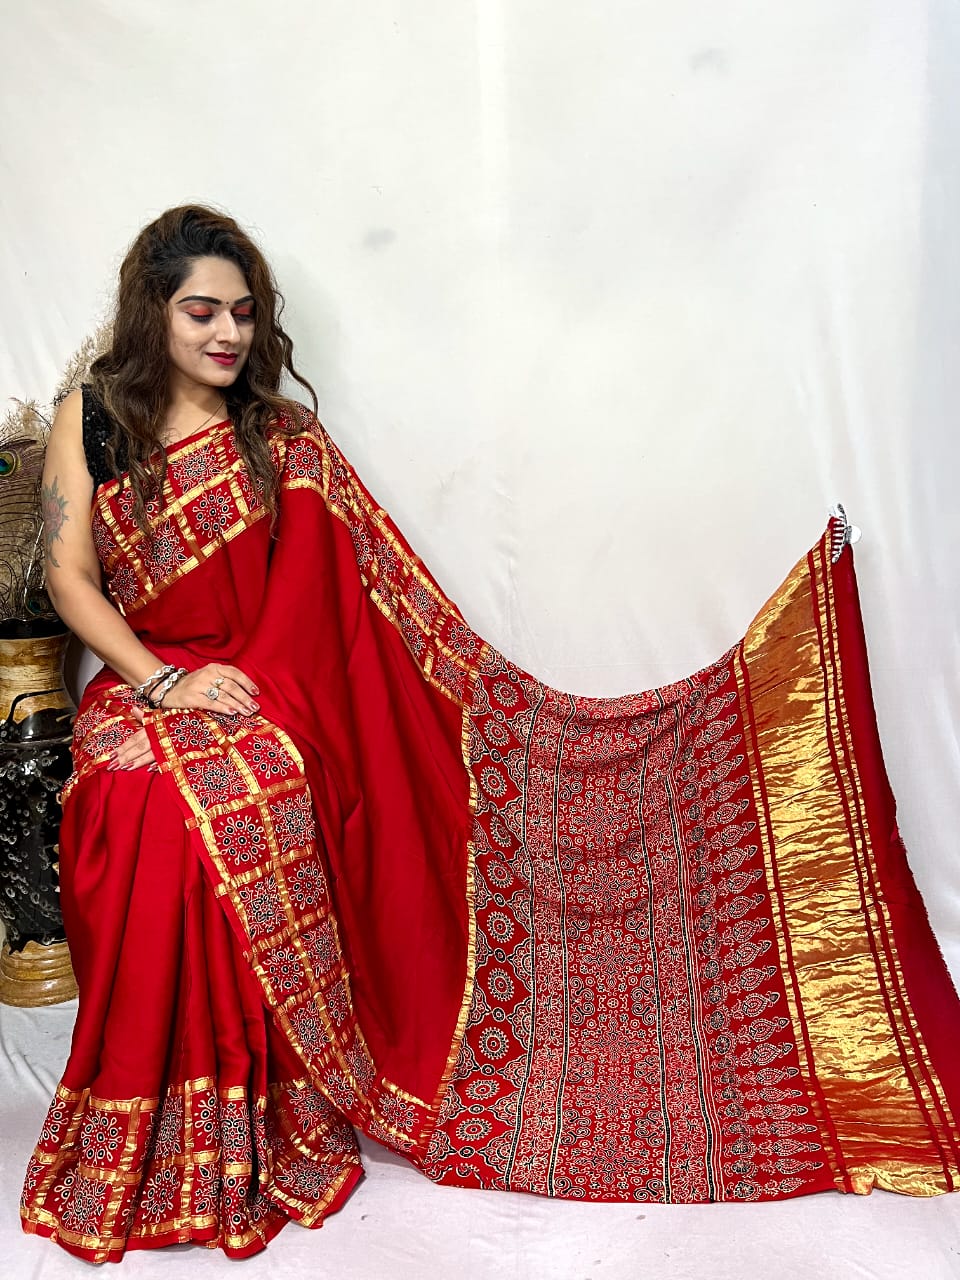 Modal Silk Gharchola Border Saree - Premium  from Ethenika.com  - Just INR 6299! Shop now at Ethenika.com 